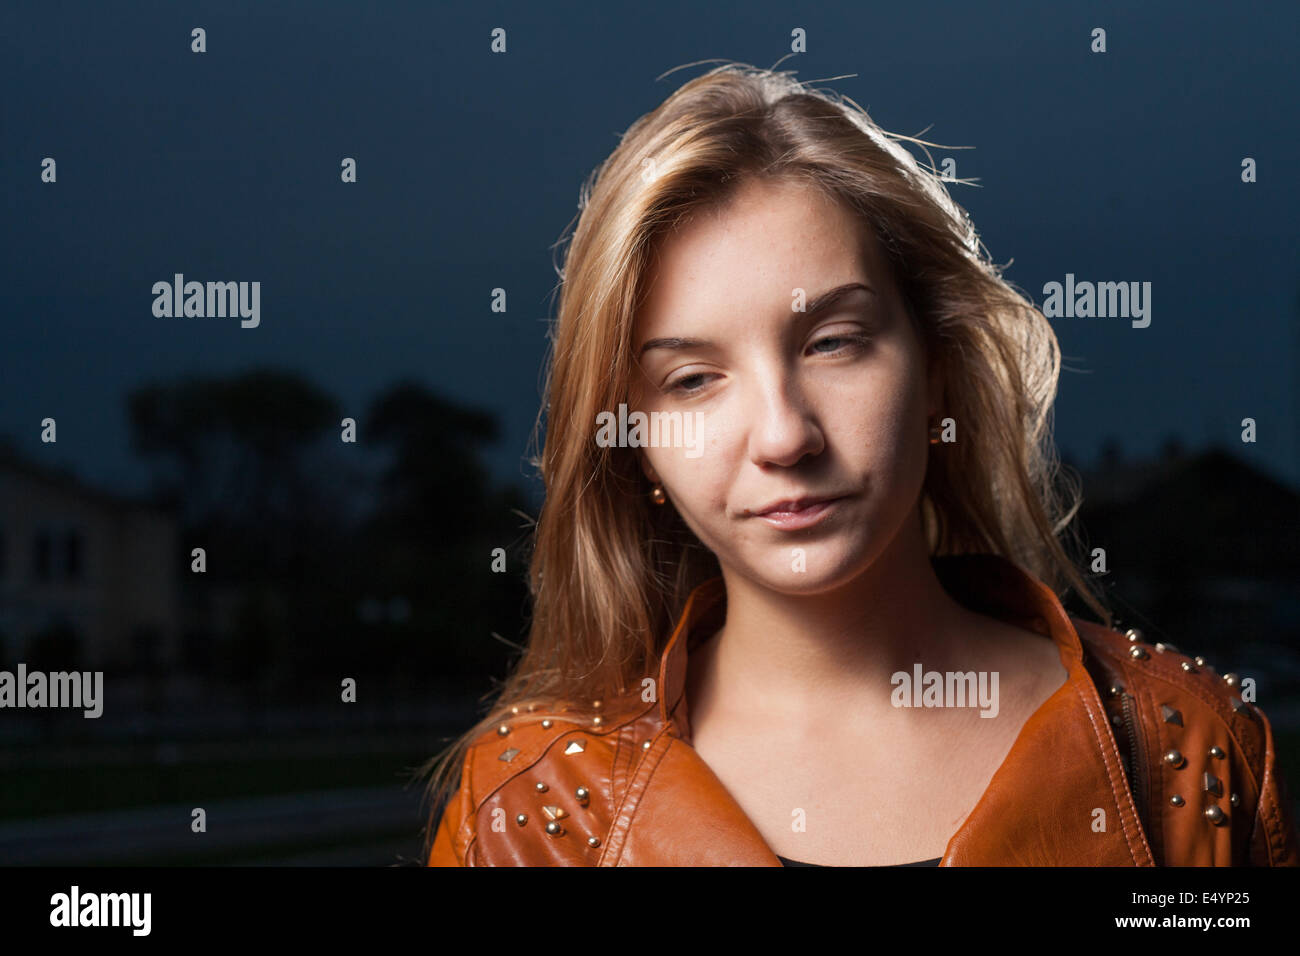 Sad young 20s woman at night Stock Photo